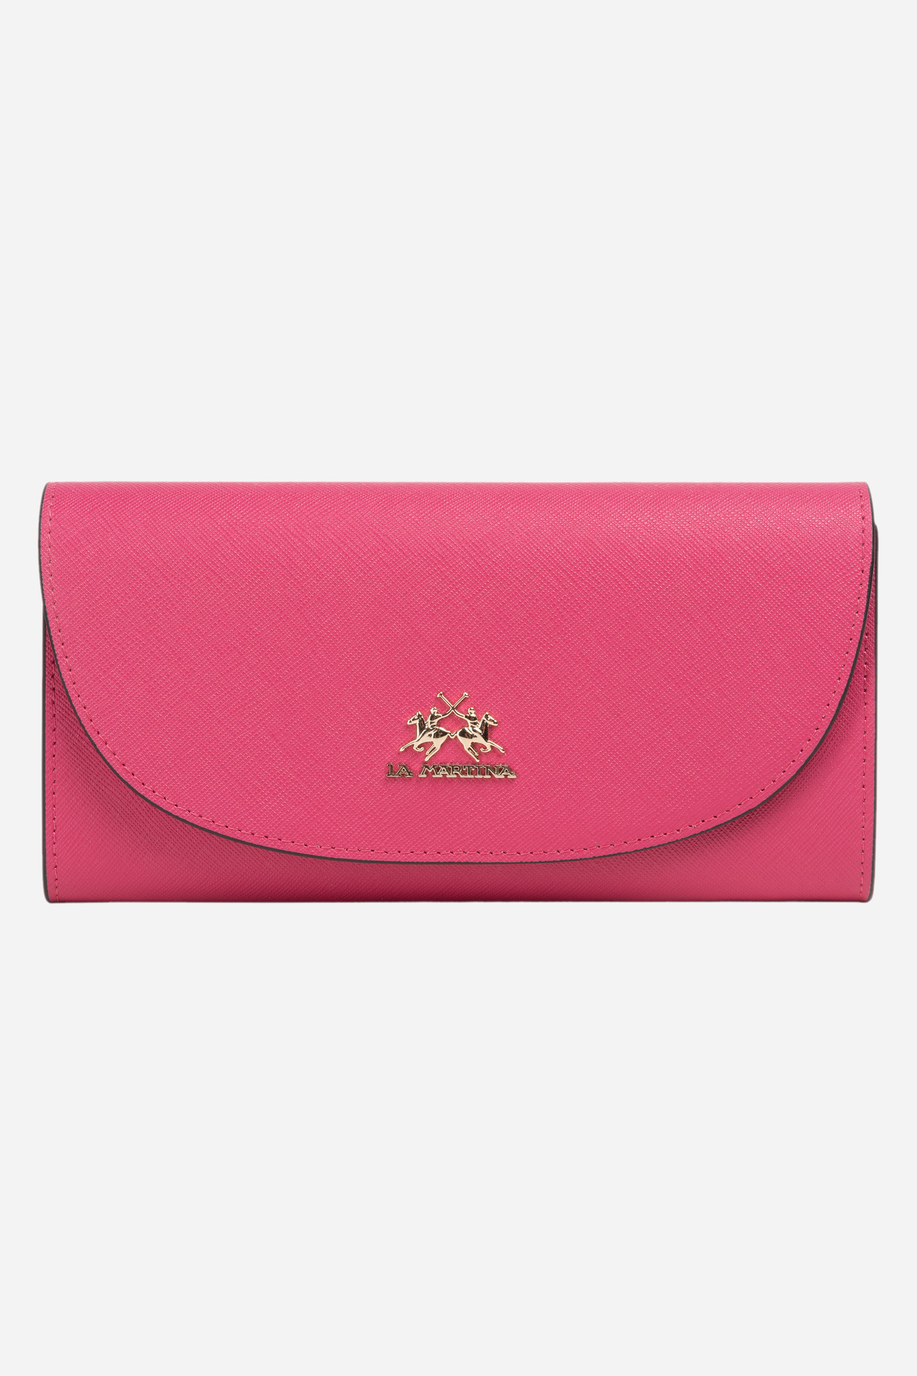 Women's leather wallet - Karina - test | La Martina - Official Online Shop